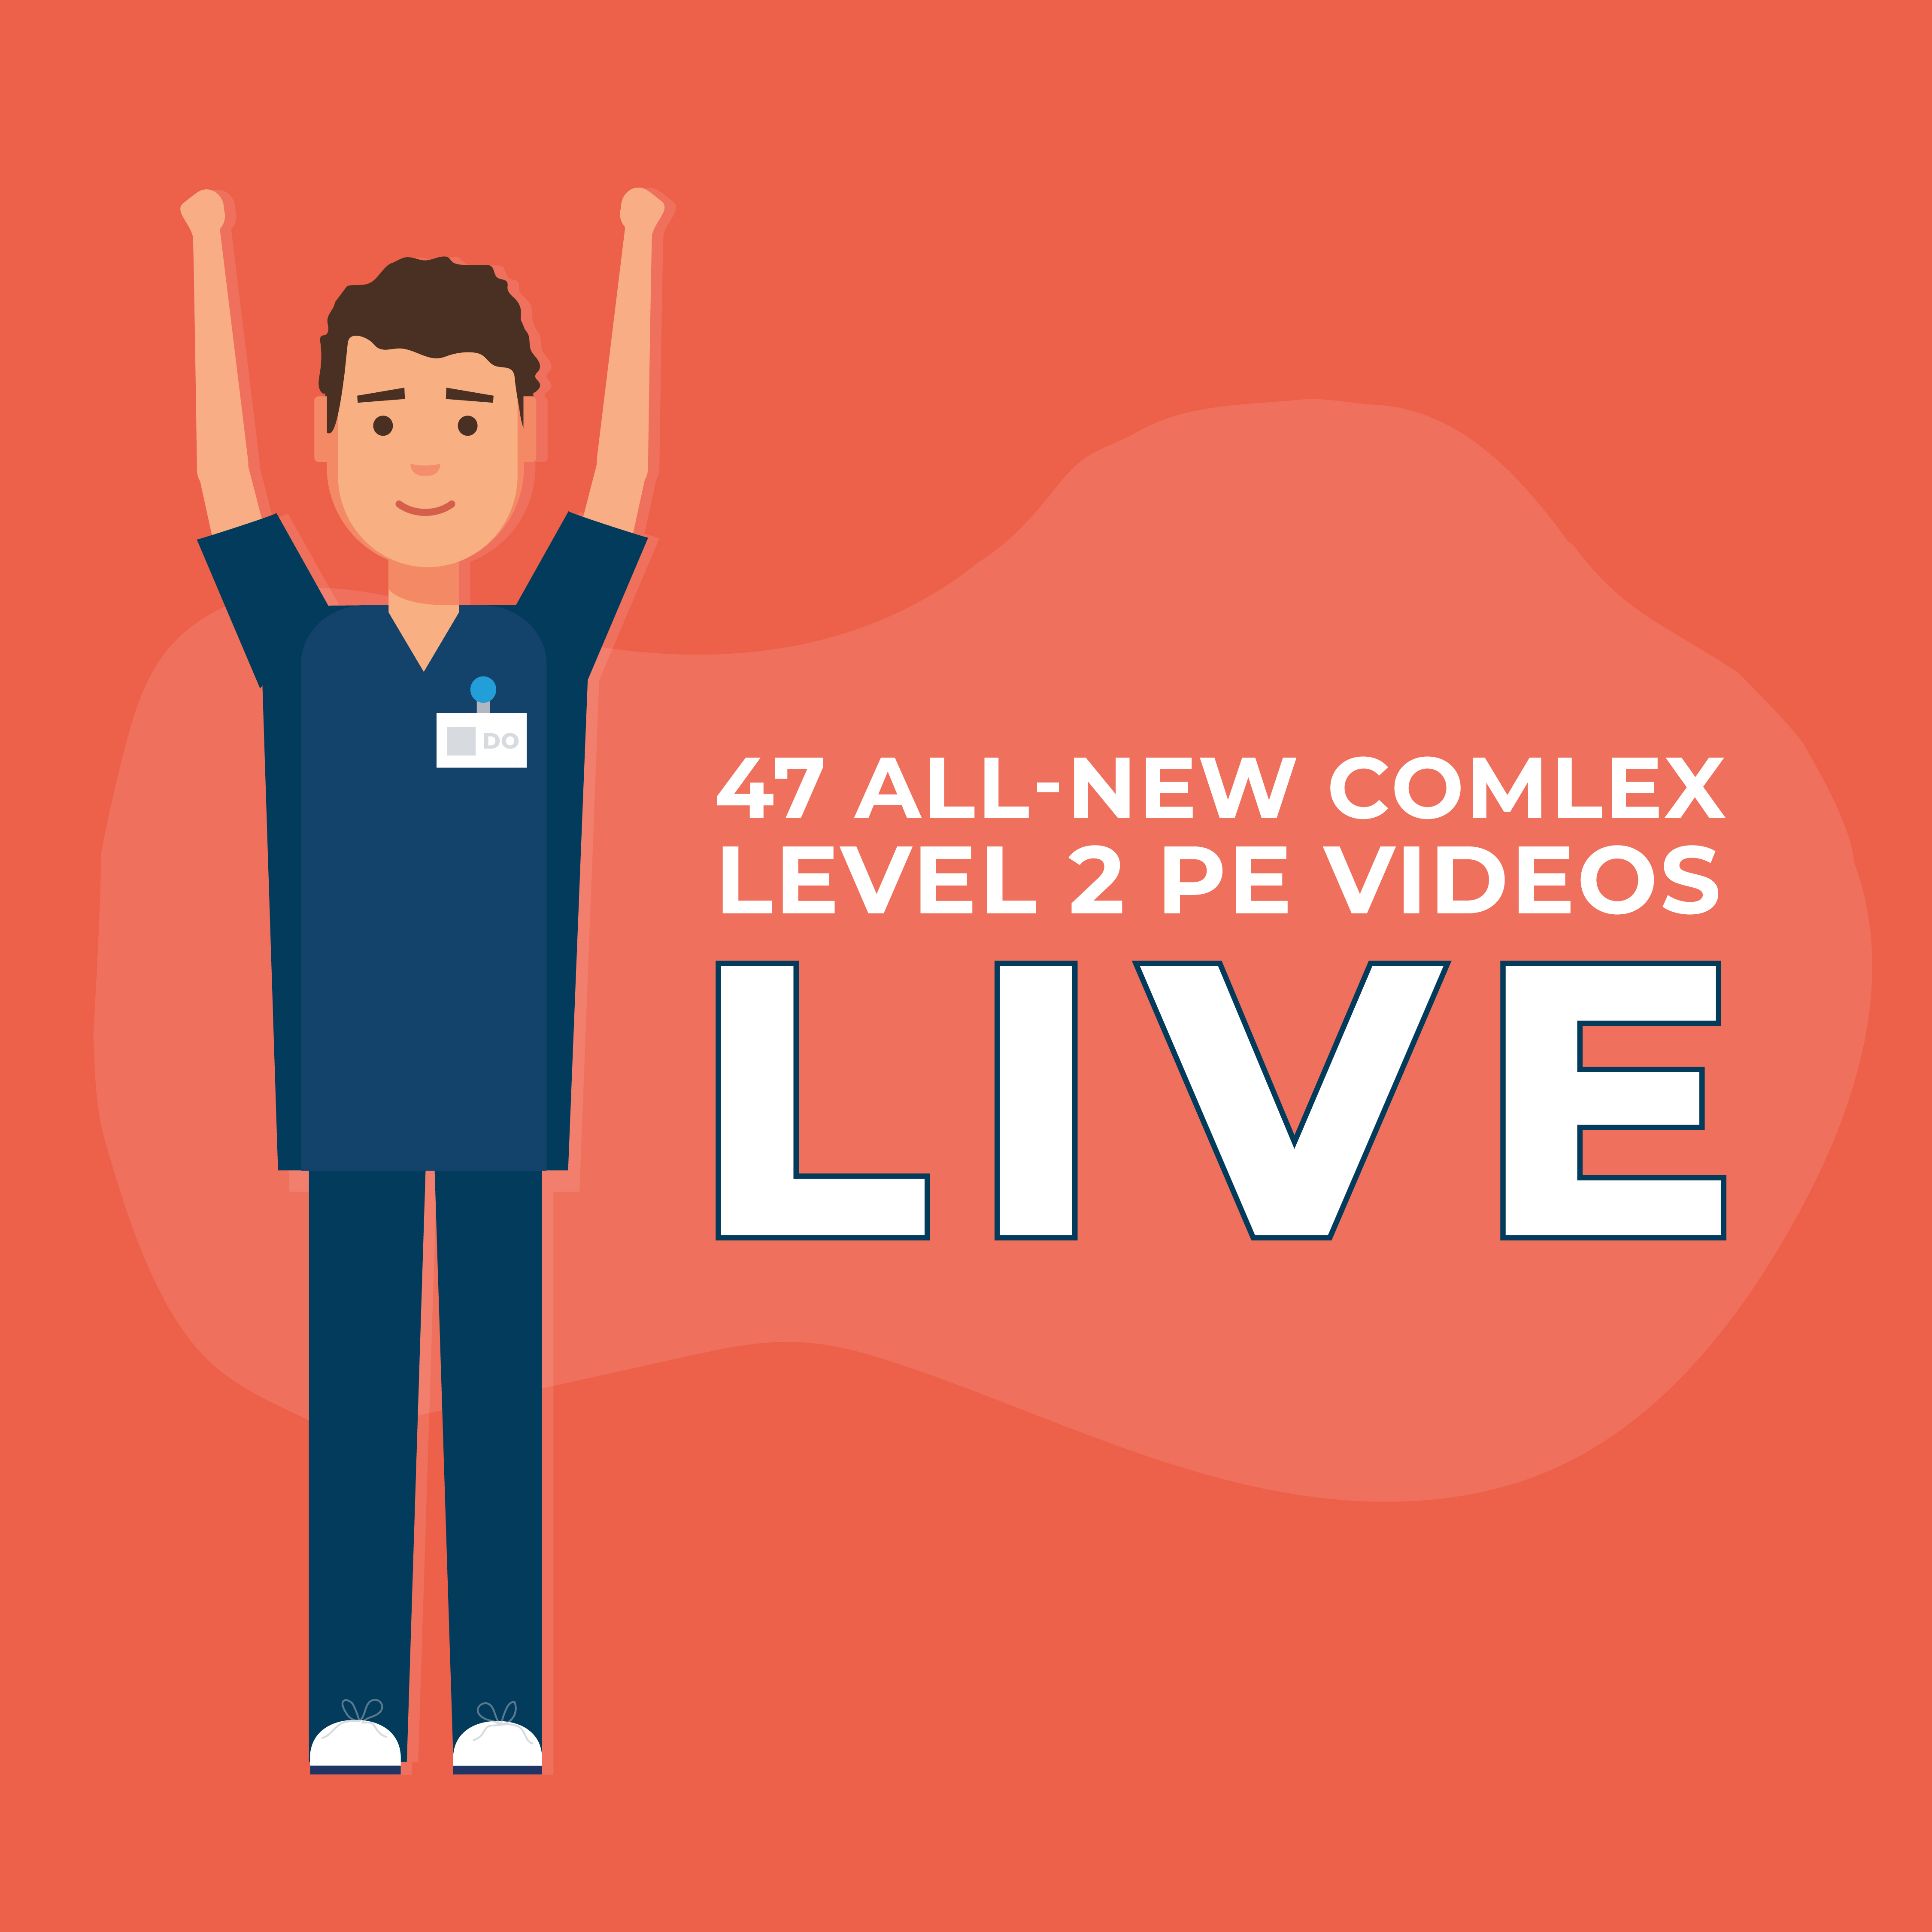 TrueLearn Releases New COMLEX Level 2 PE Video Series